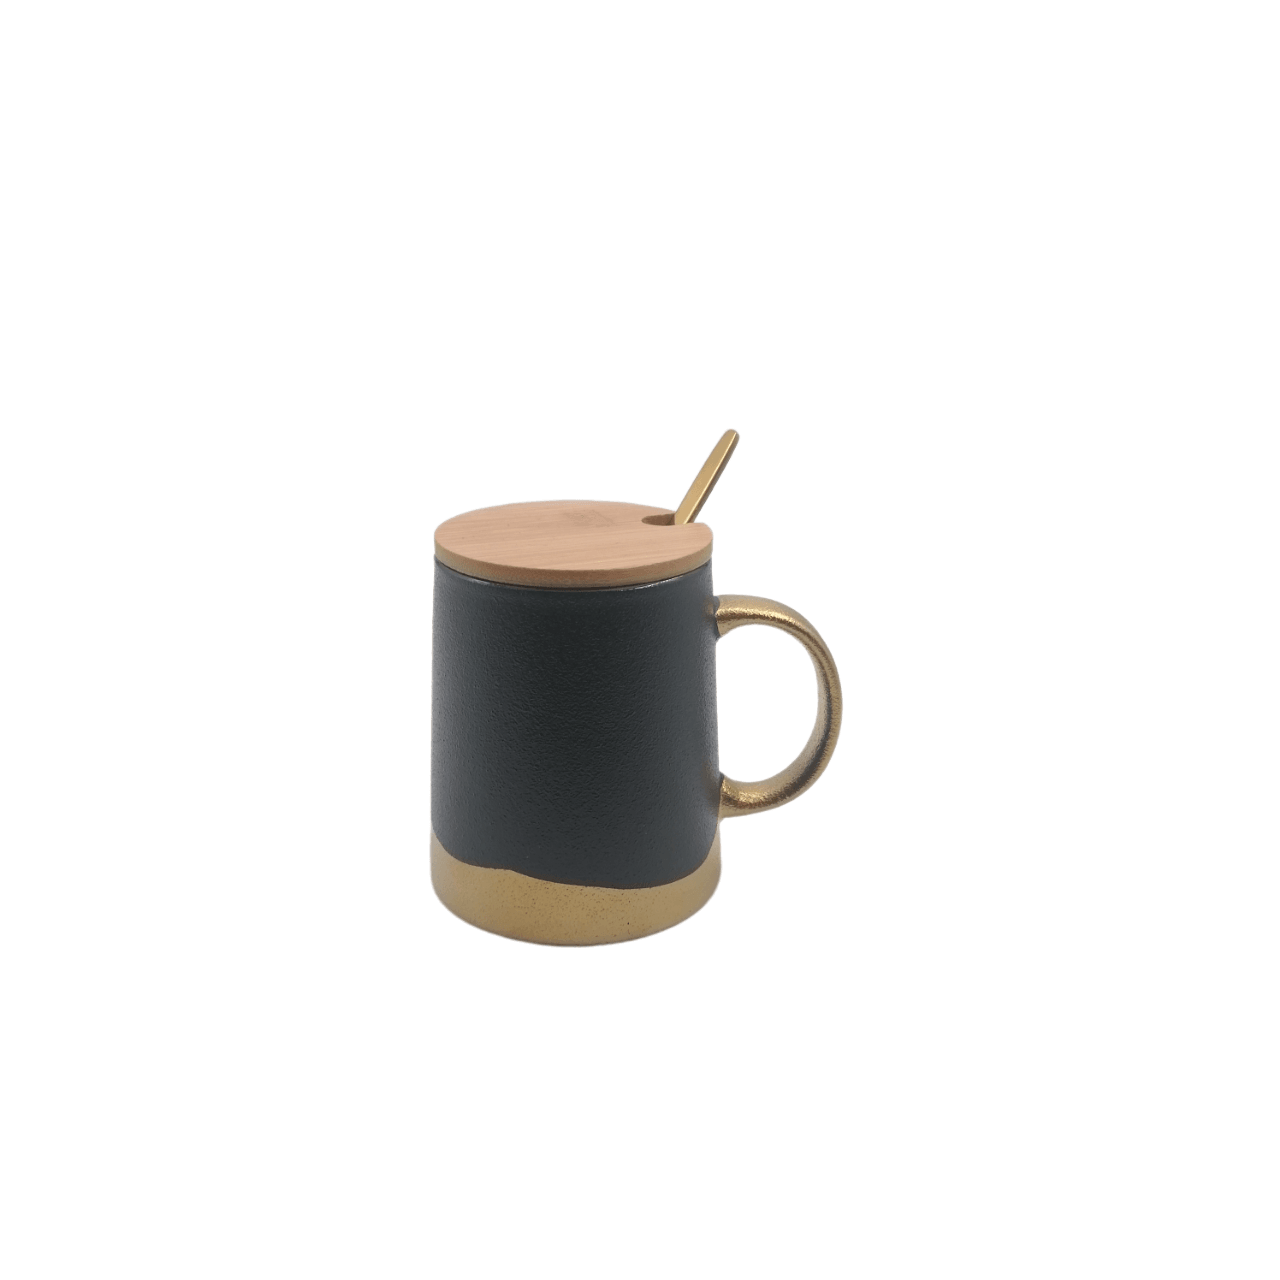 Ceramic Mug Set with Golden Base - Home And Trends